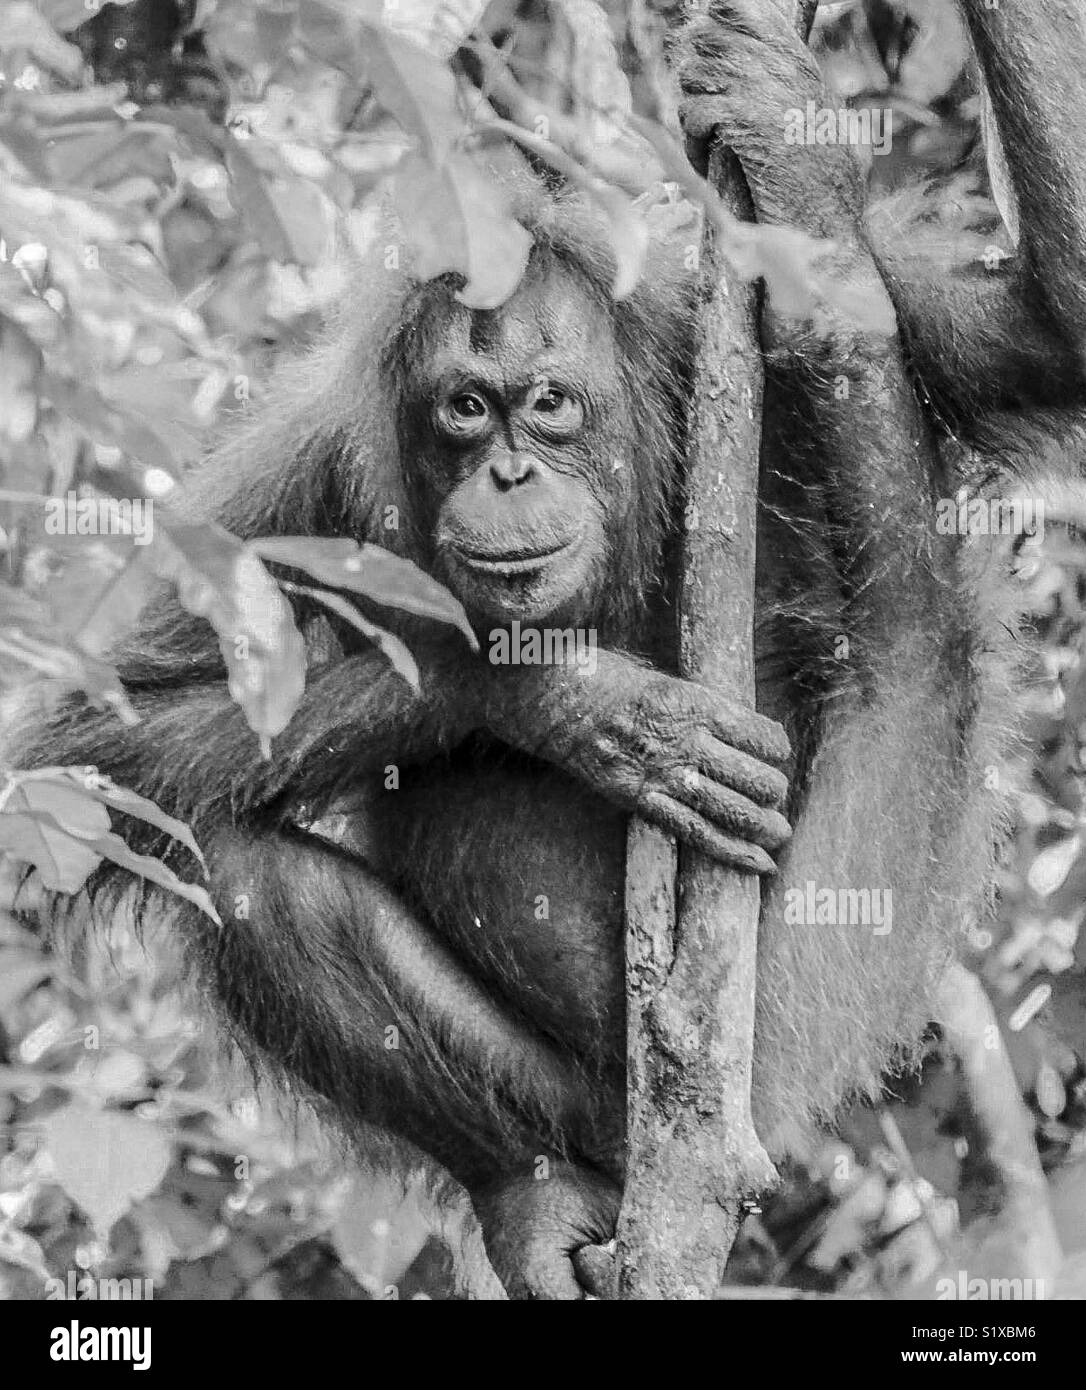 Wild orangutan in the forests of Borneo Stock Photo